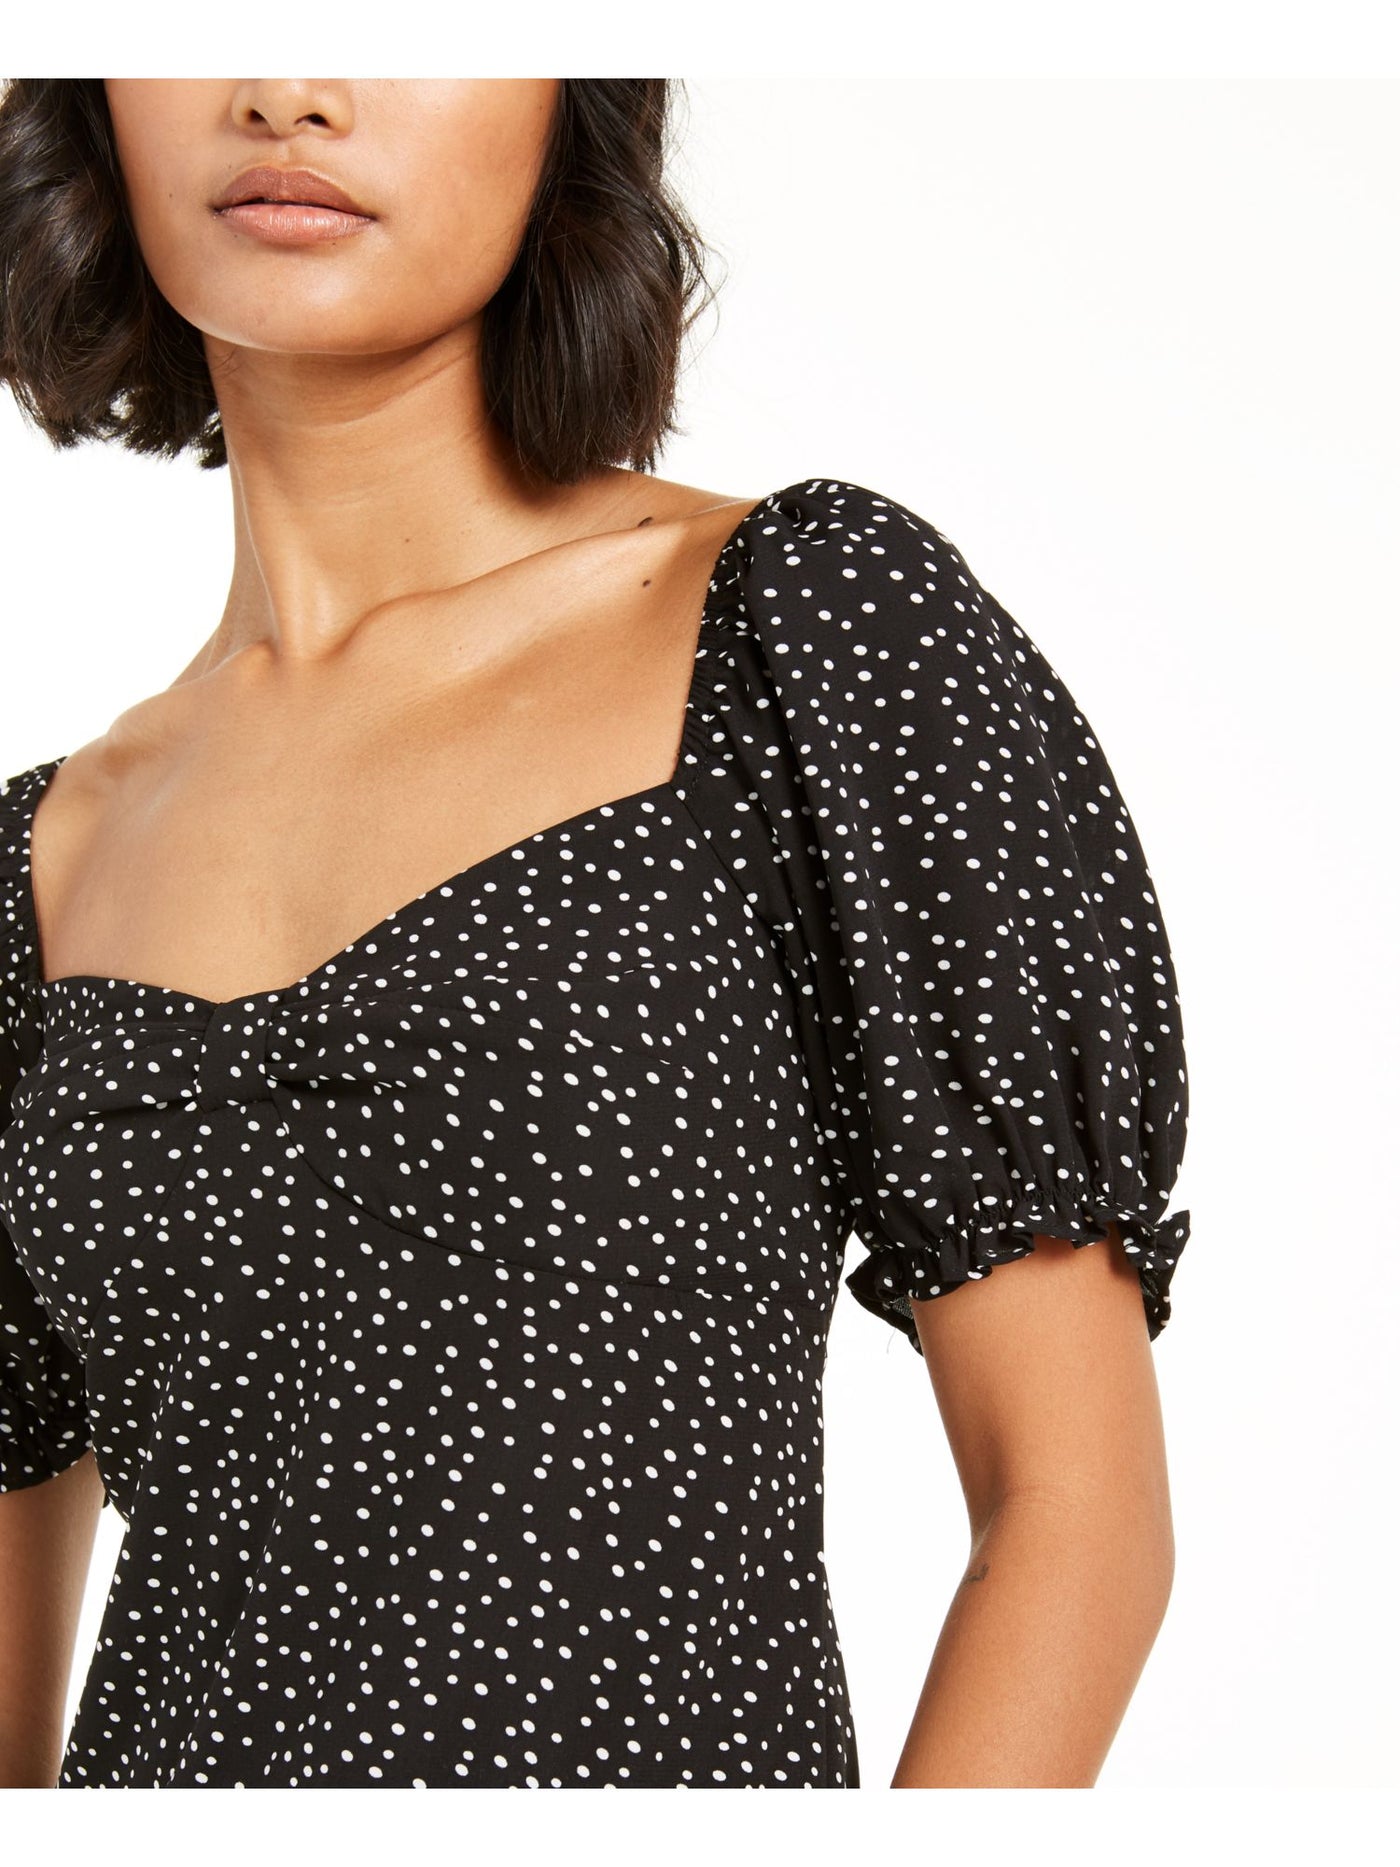 ASH & VIOLET Womens Black Polka Dot Short Sleeve Top Size: S